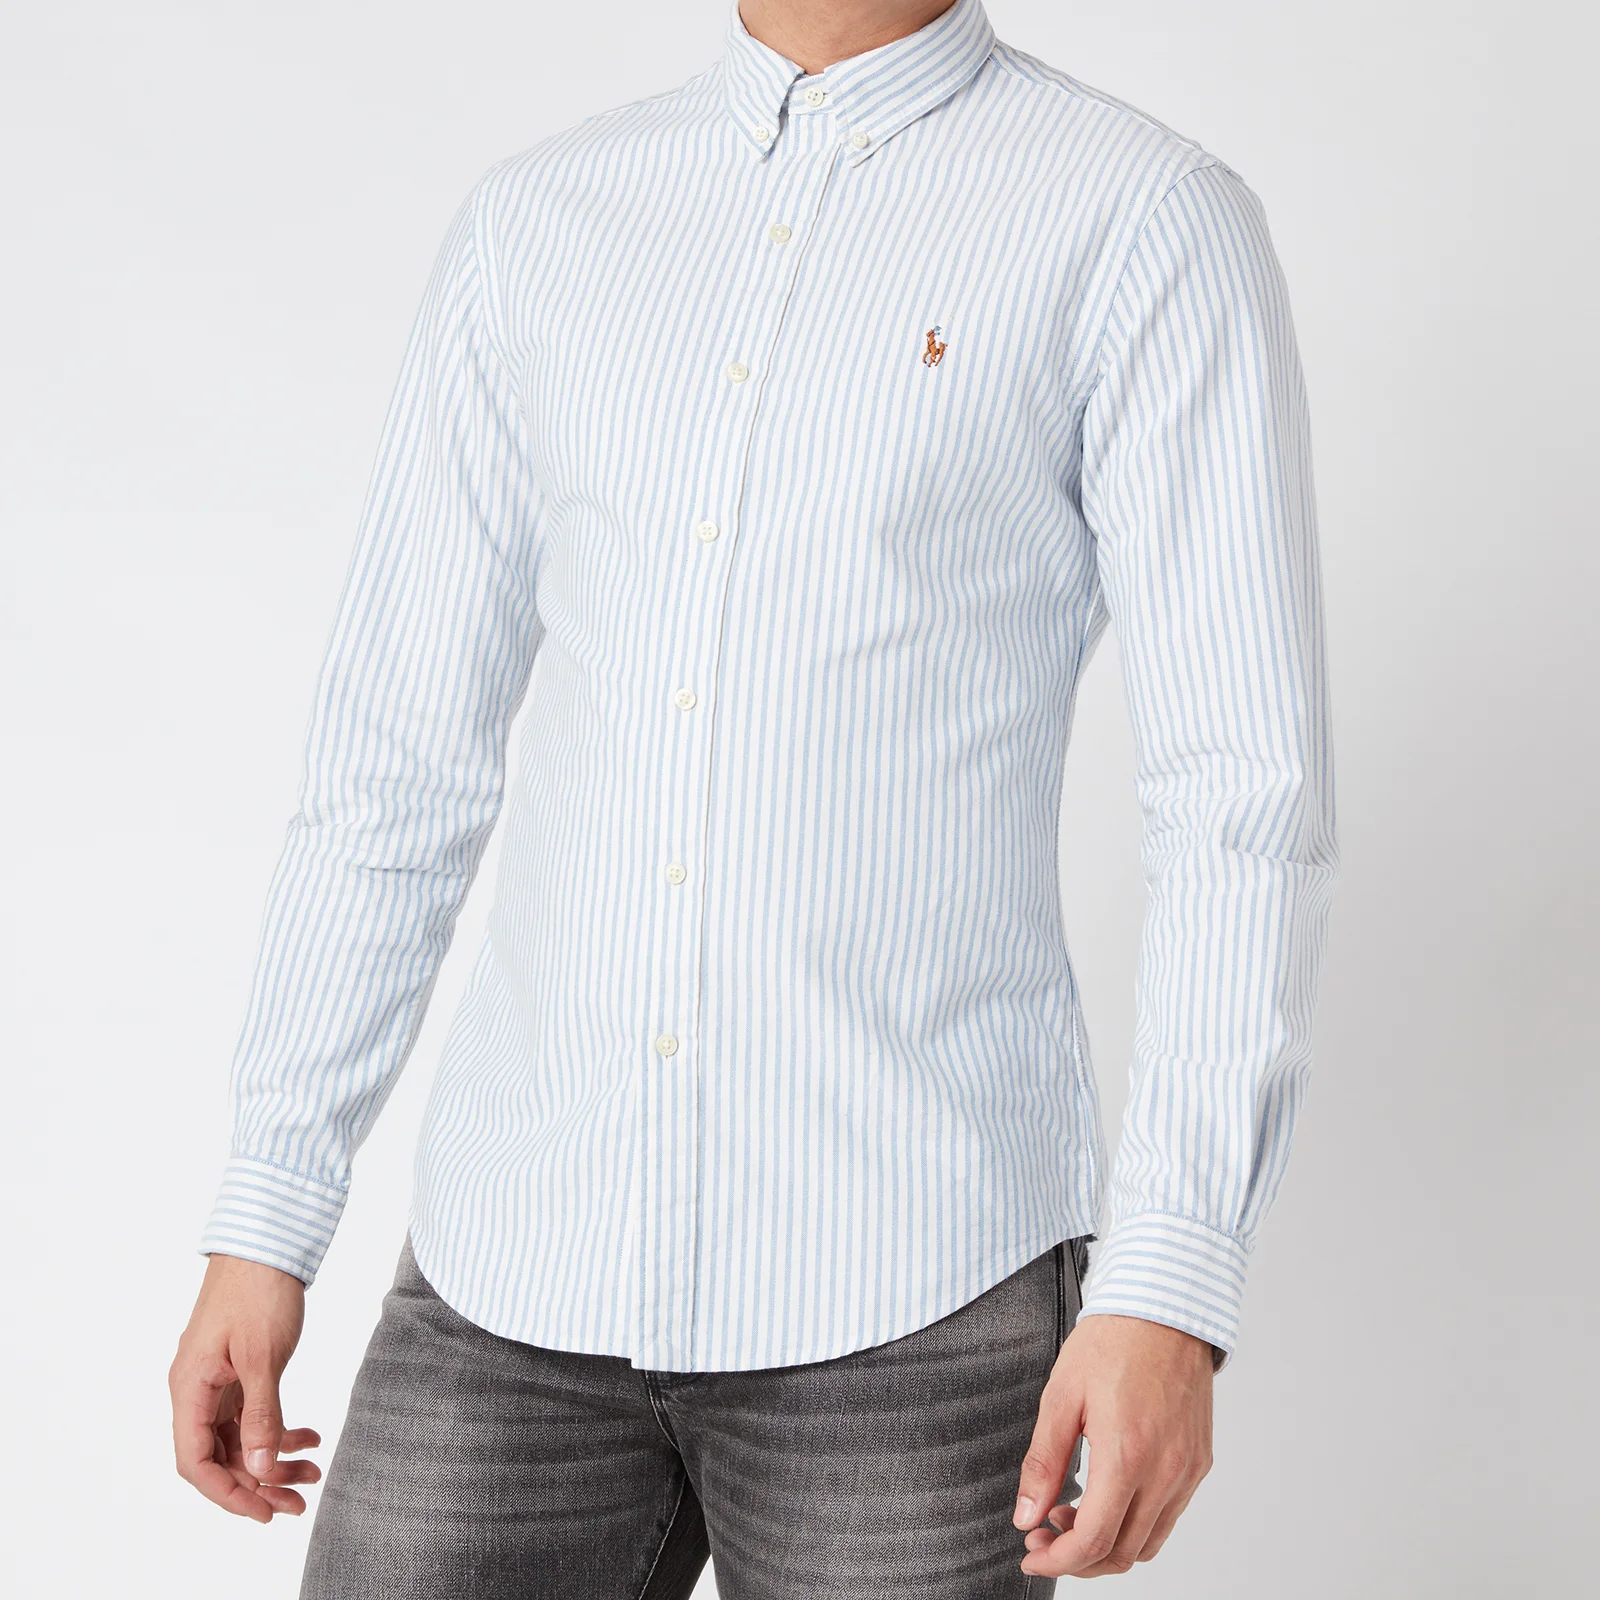 Polo Ralph Lauren Men's Slim Fit Oxford Shirt - Blue/White Image 1